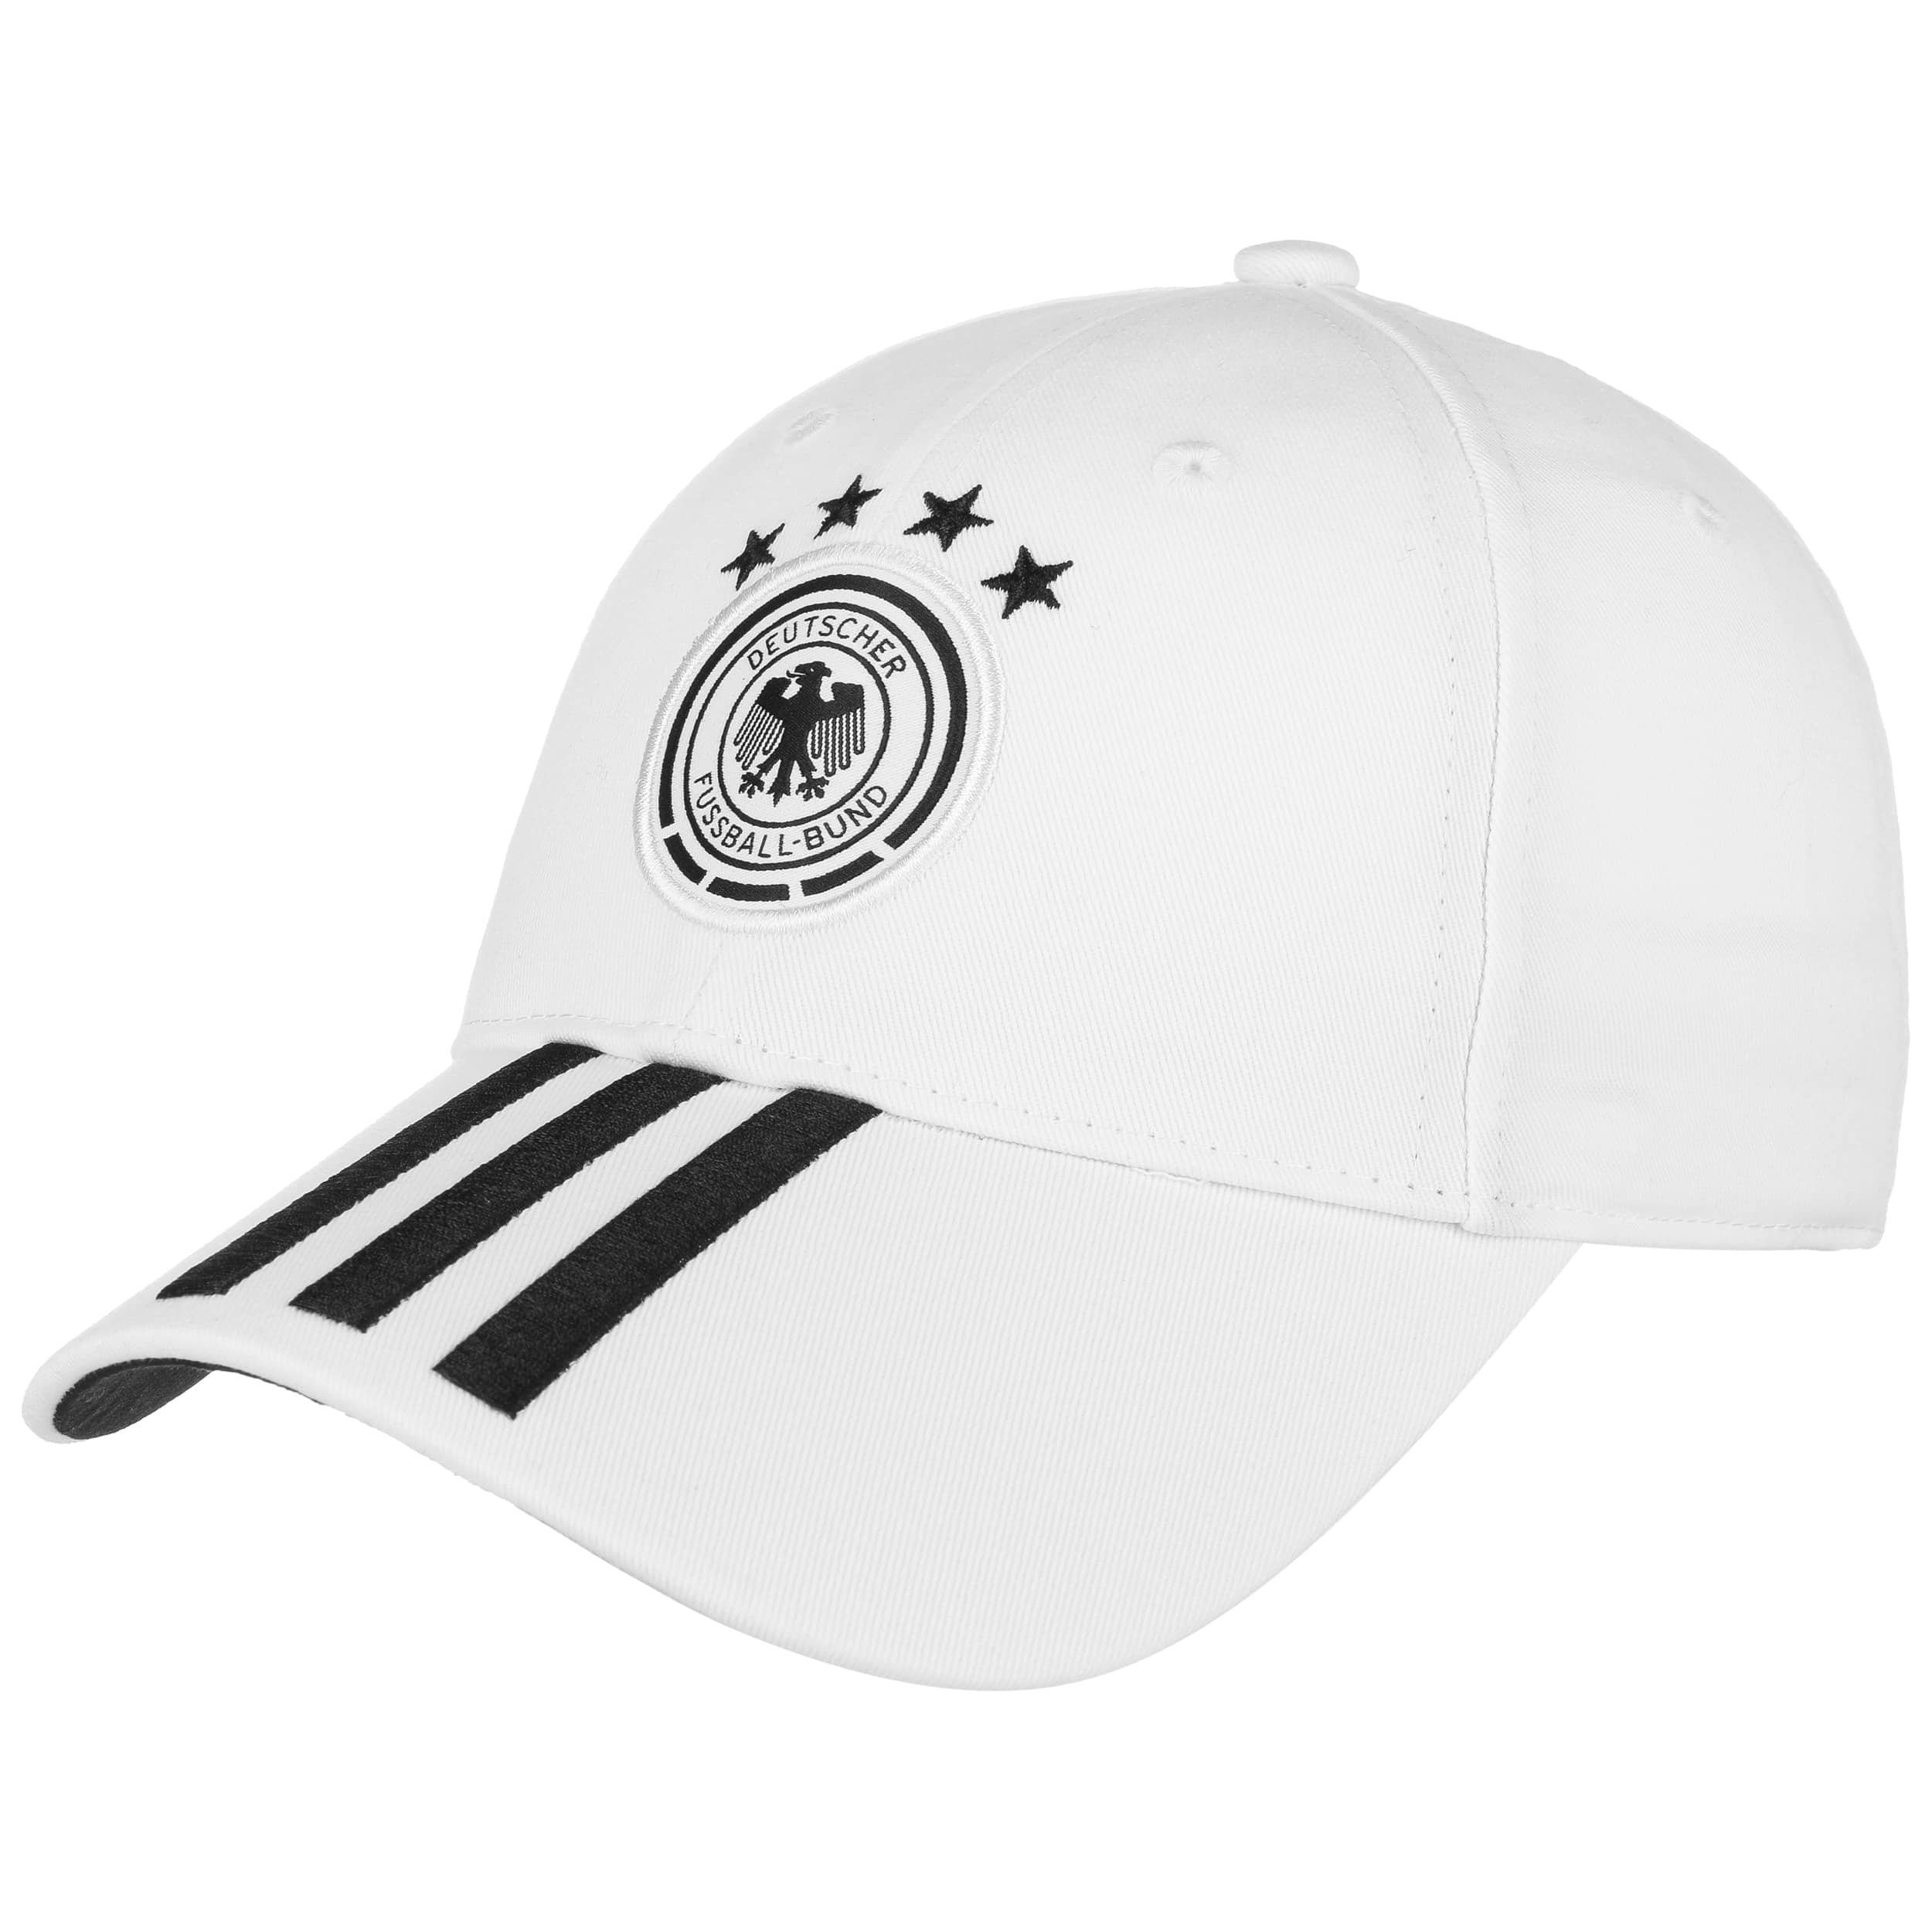 DFB 3 Cap by adidas 19,95 €